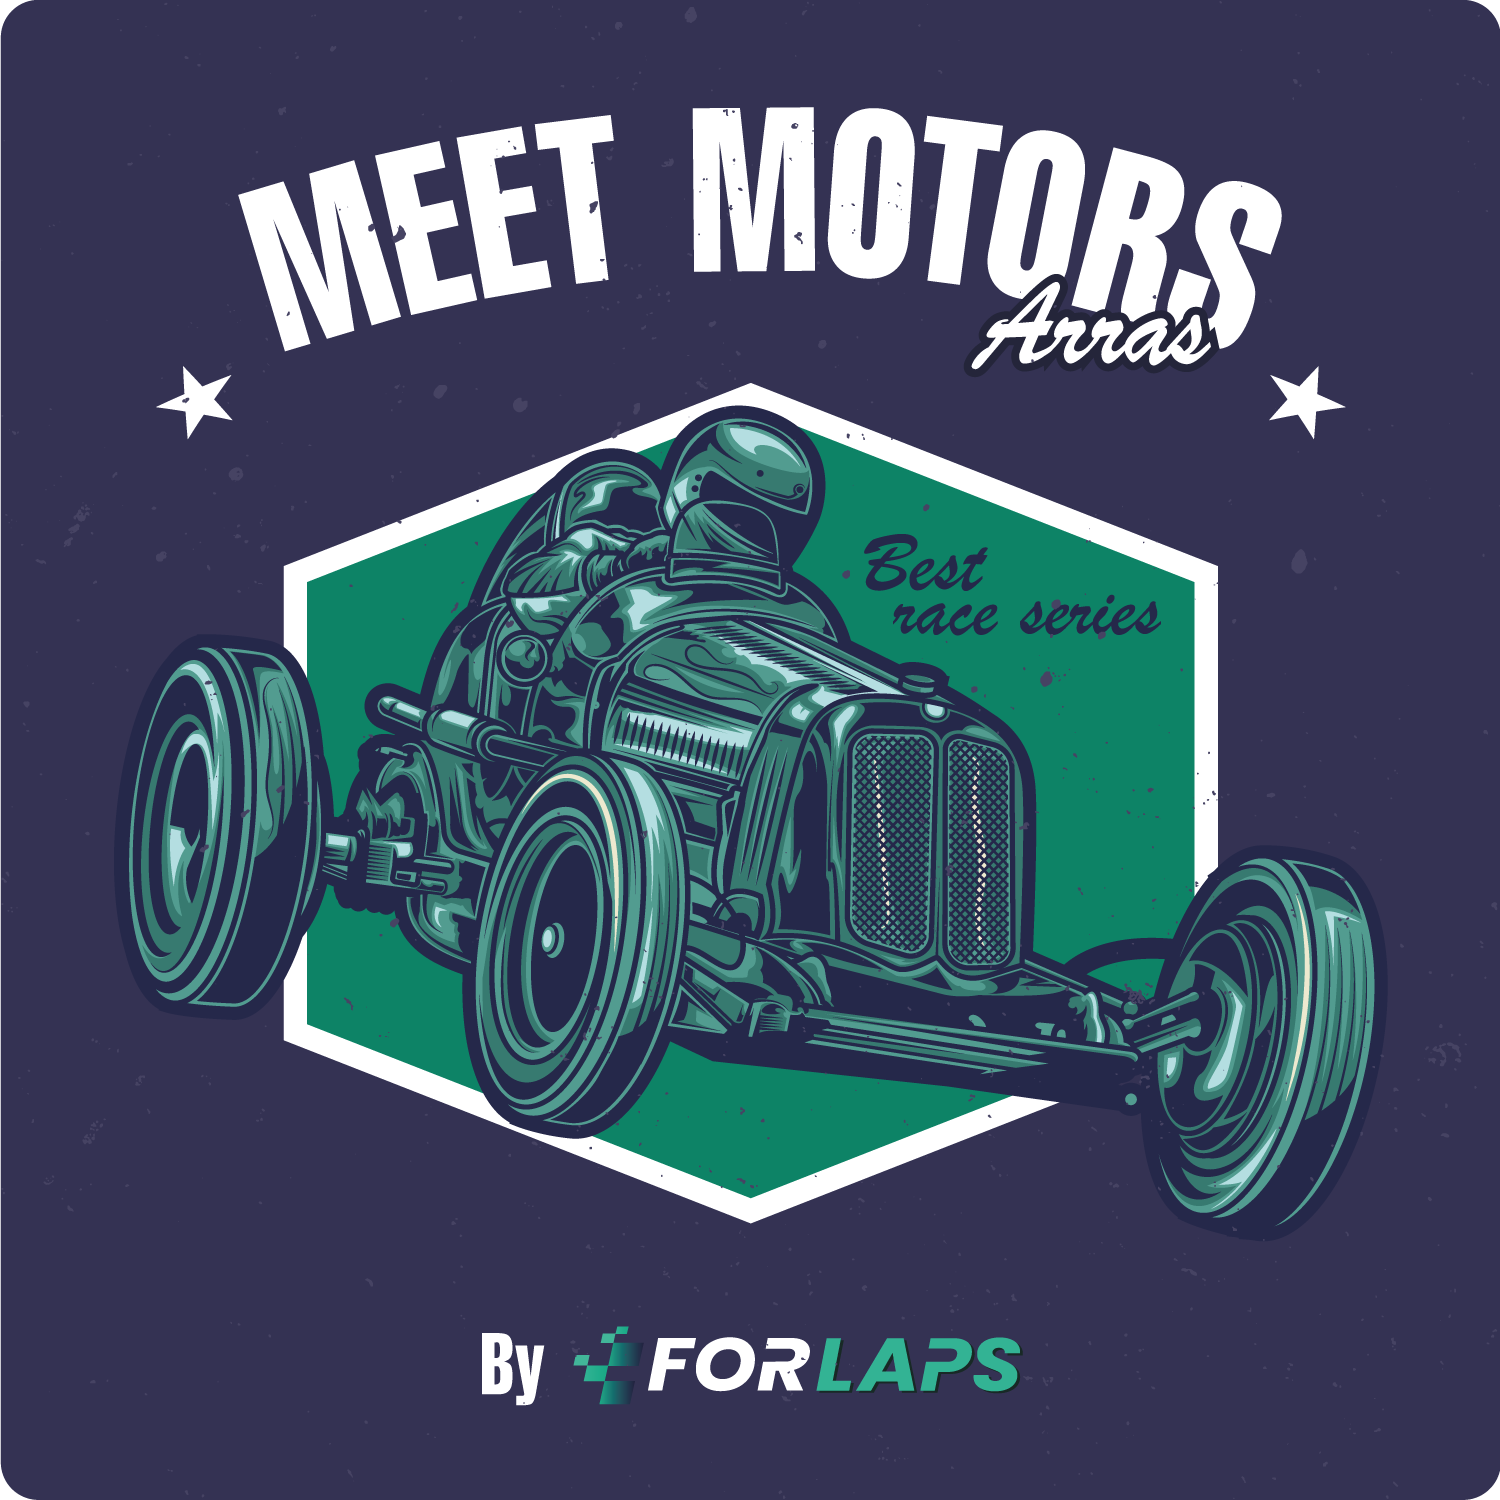 Meet Motors Arras